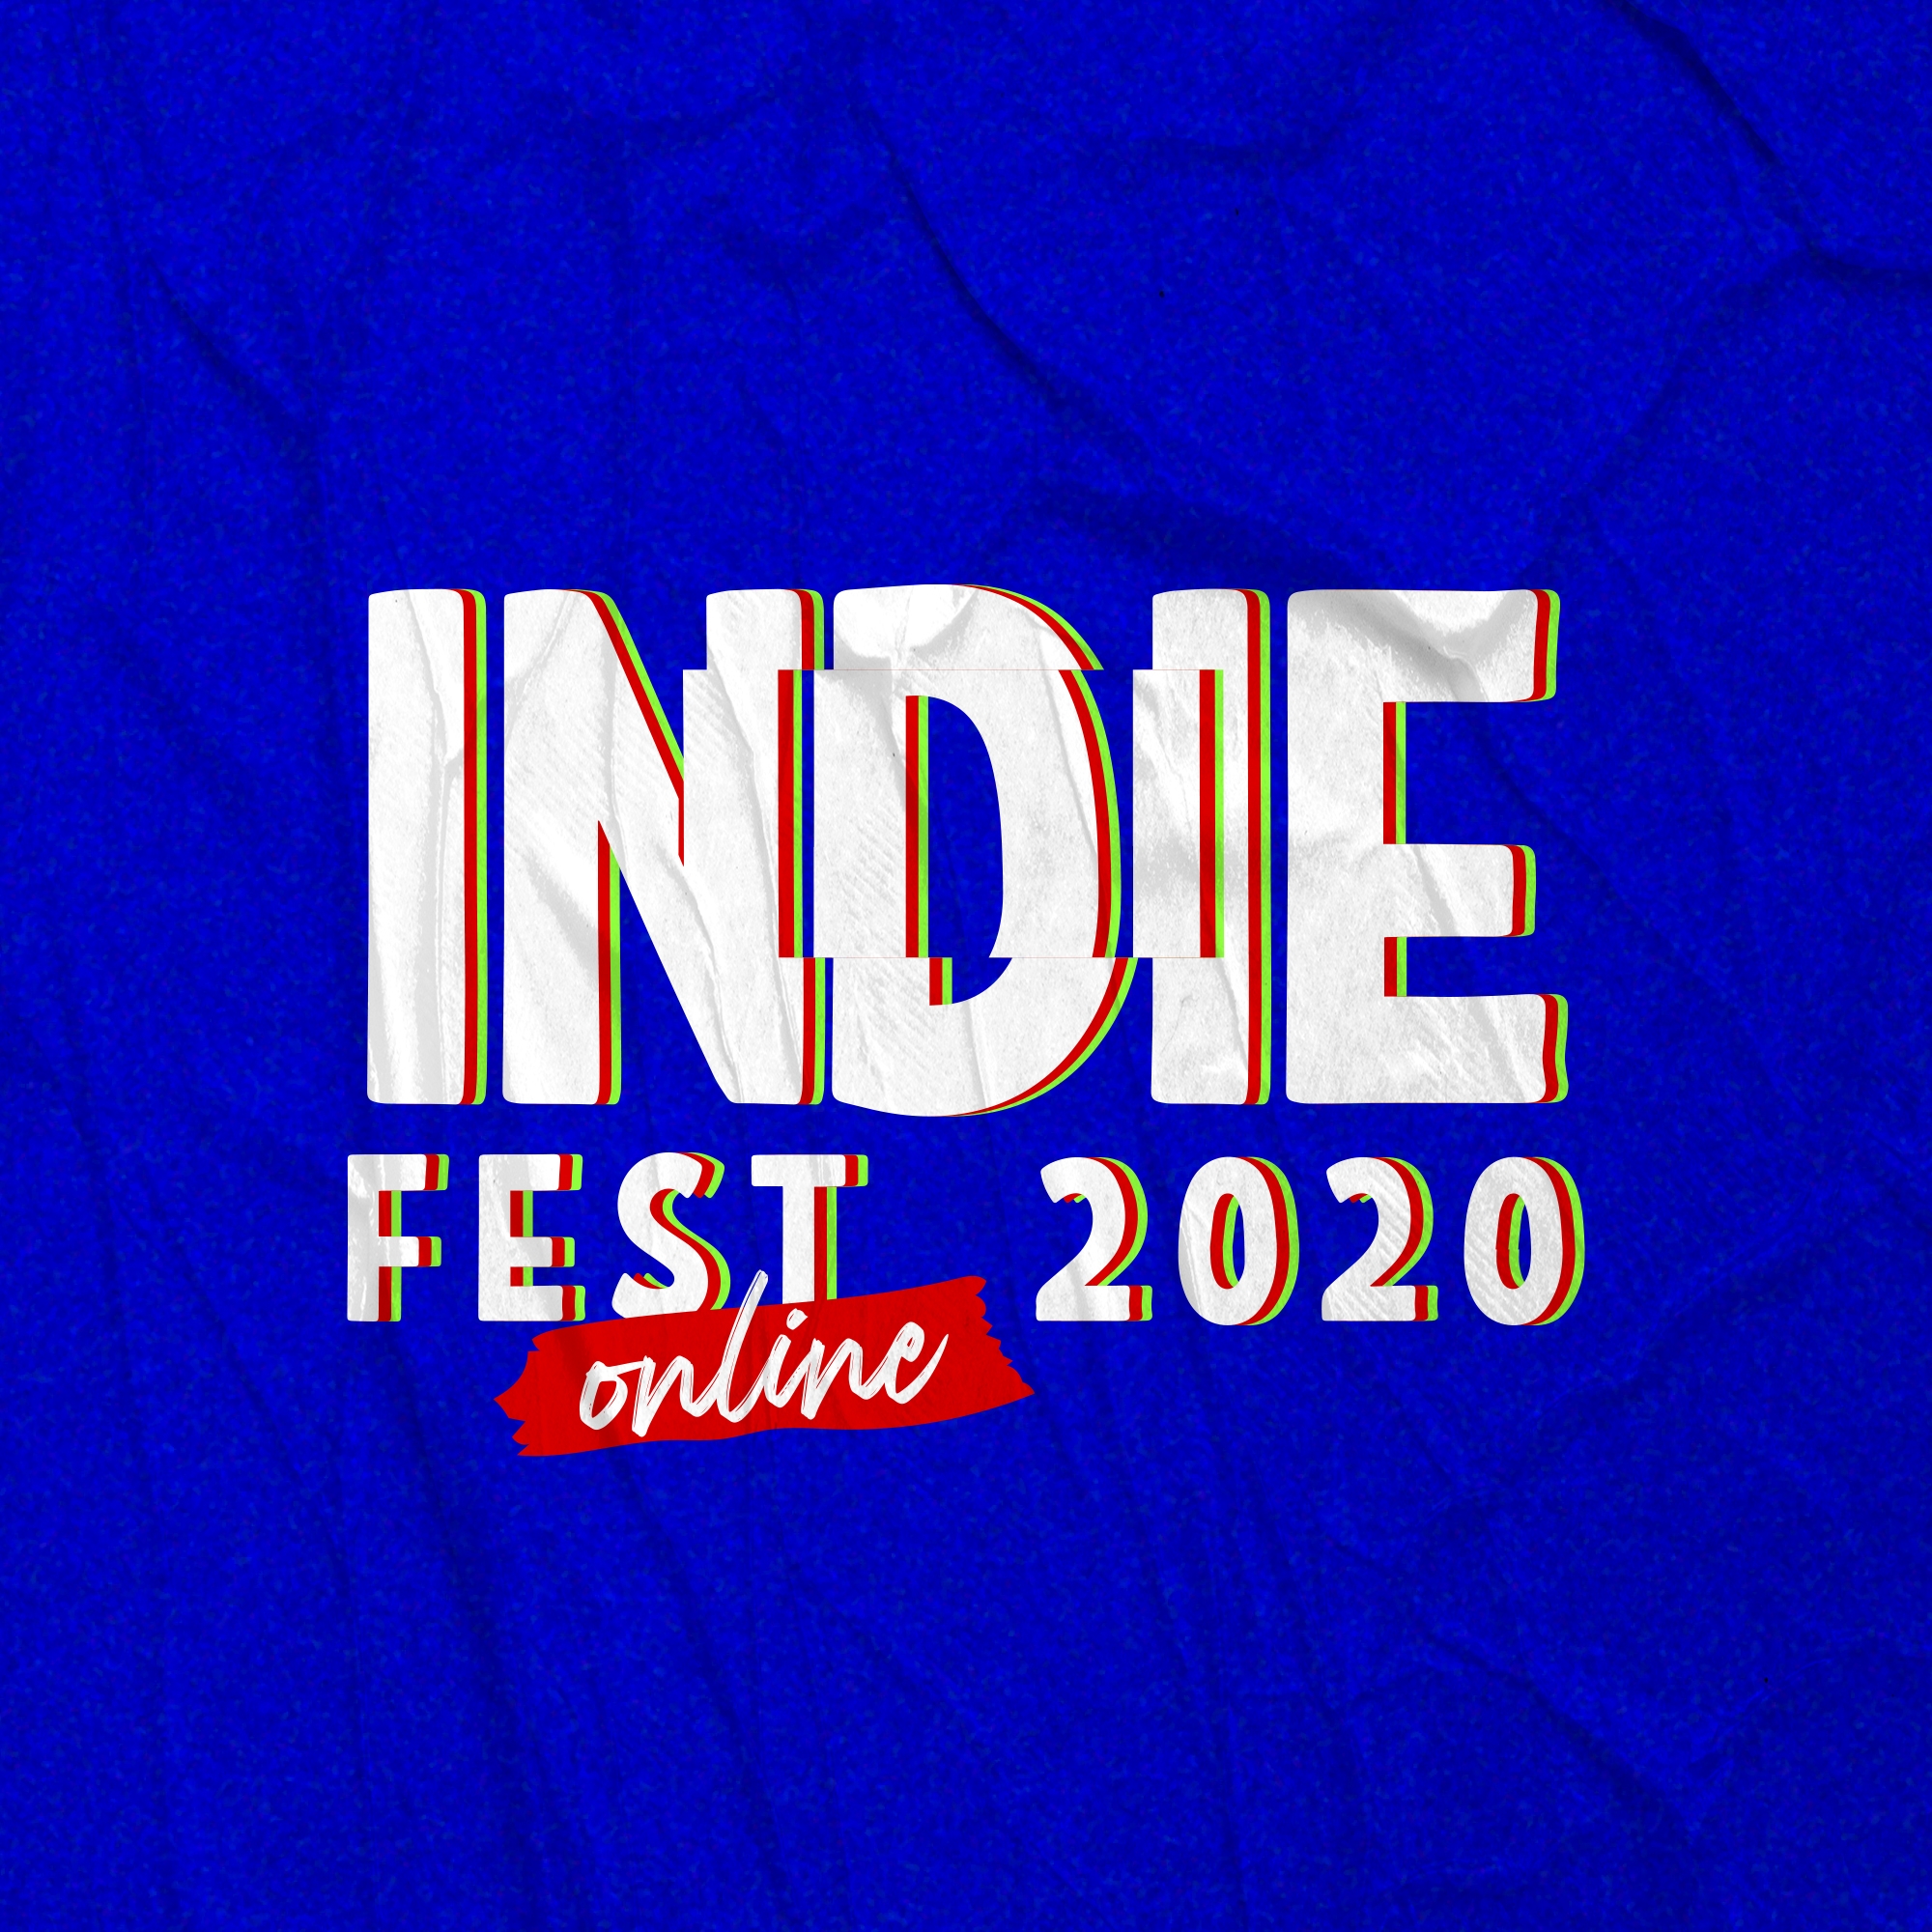  Indie Fest Campeche 2020 Playlist Oficial